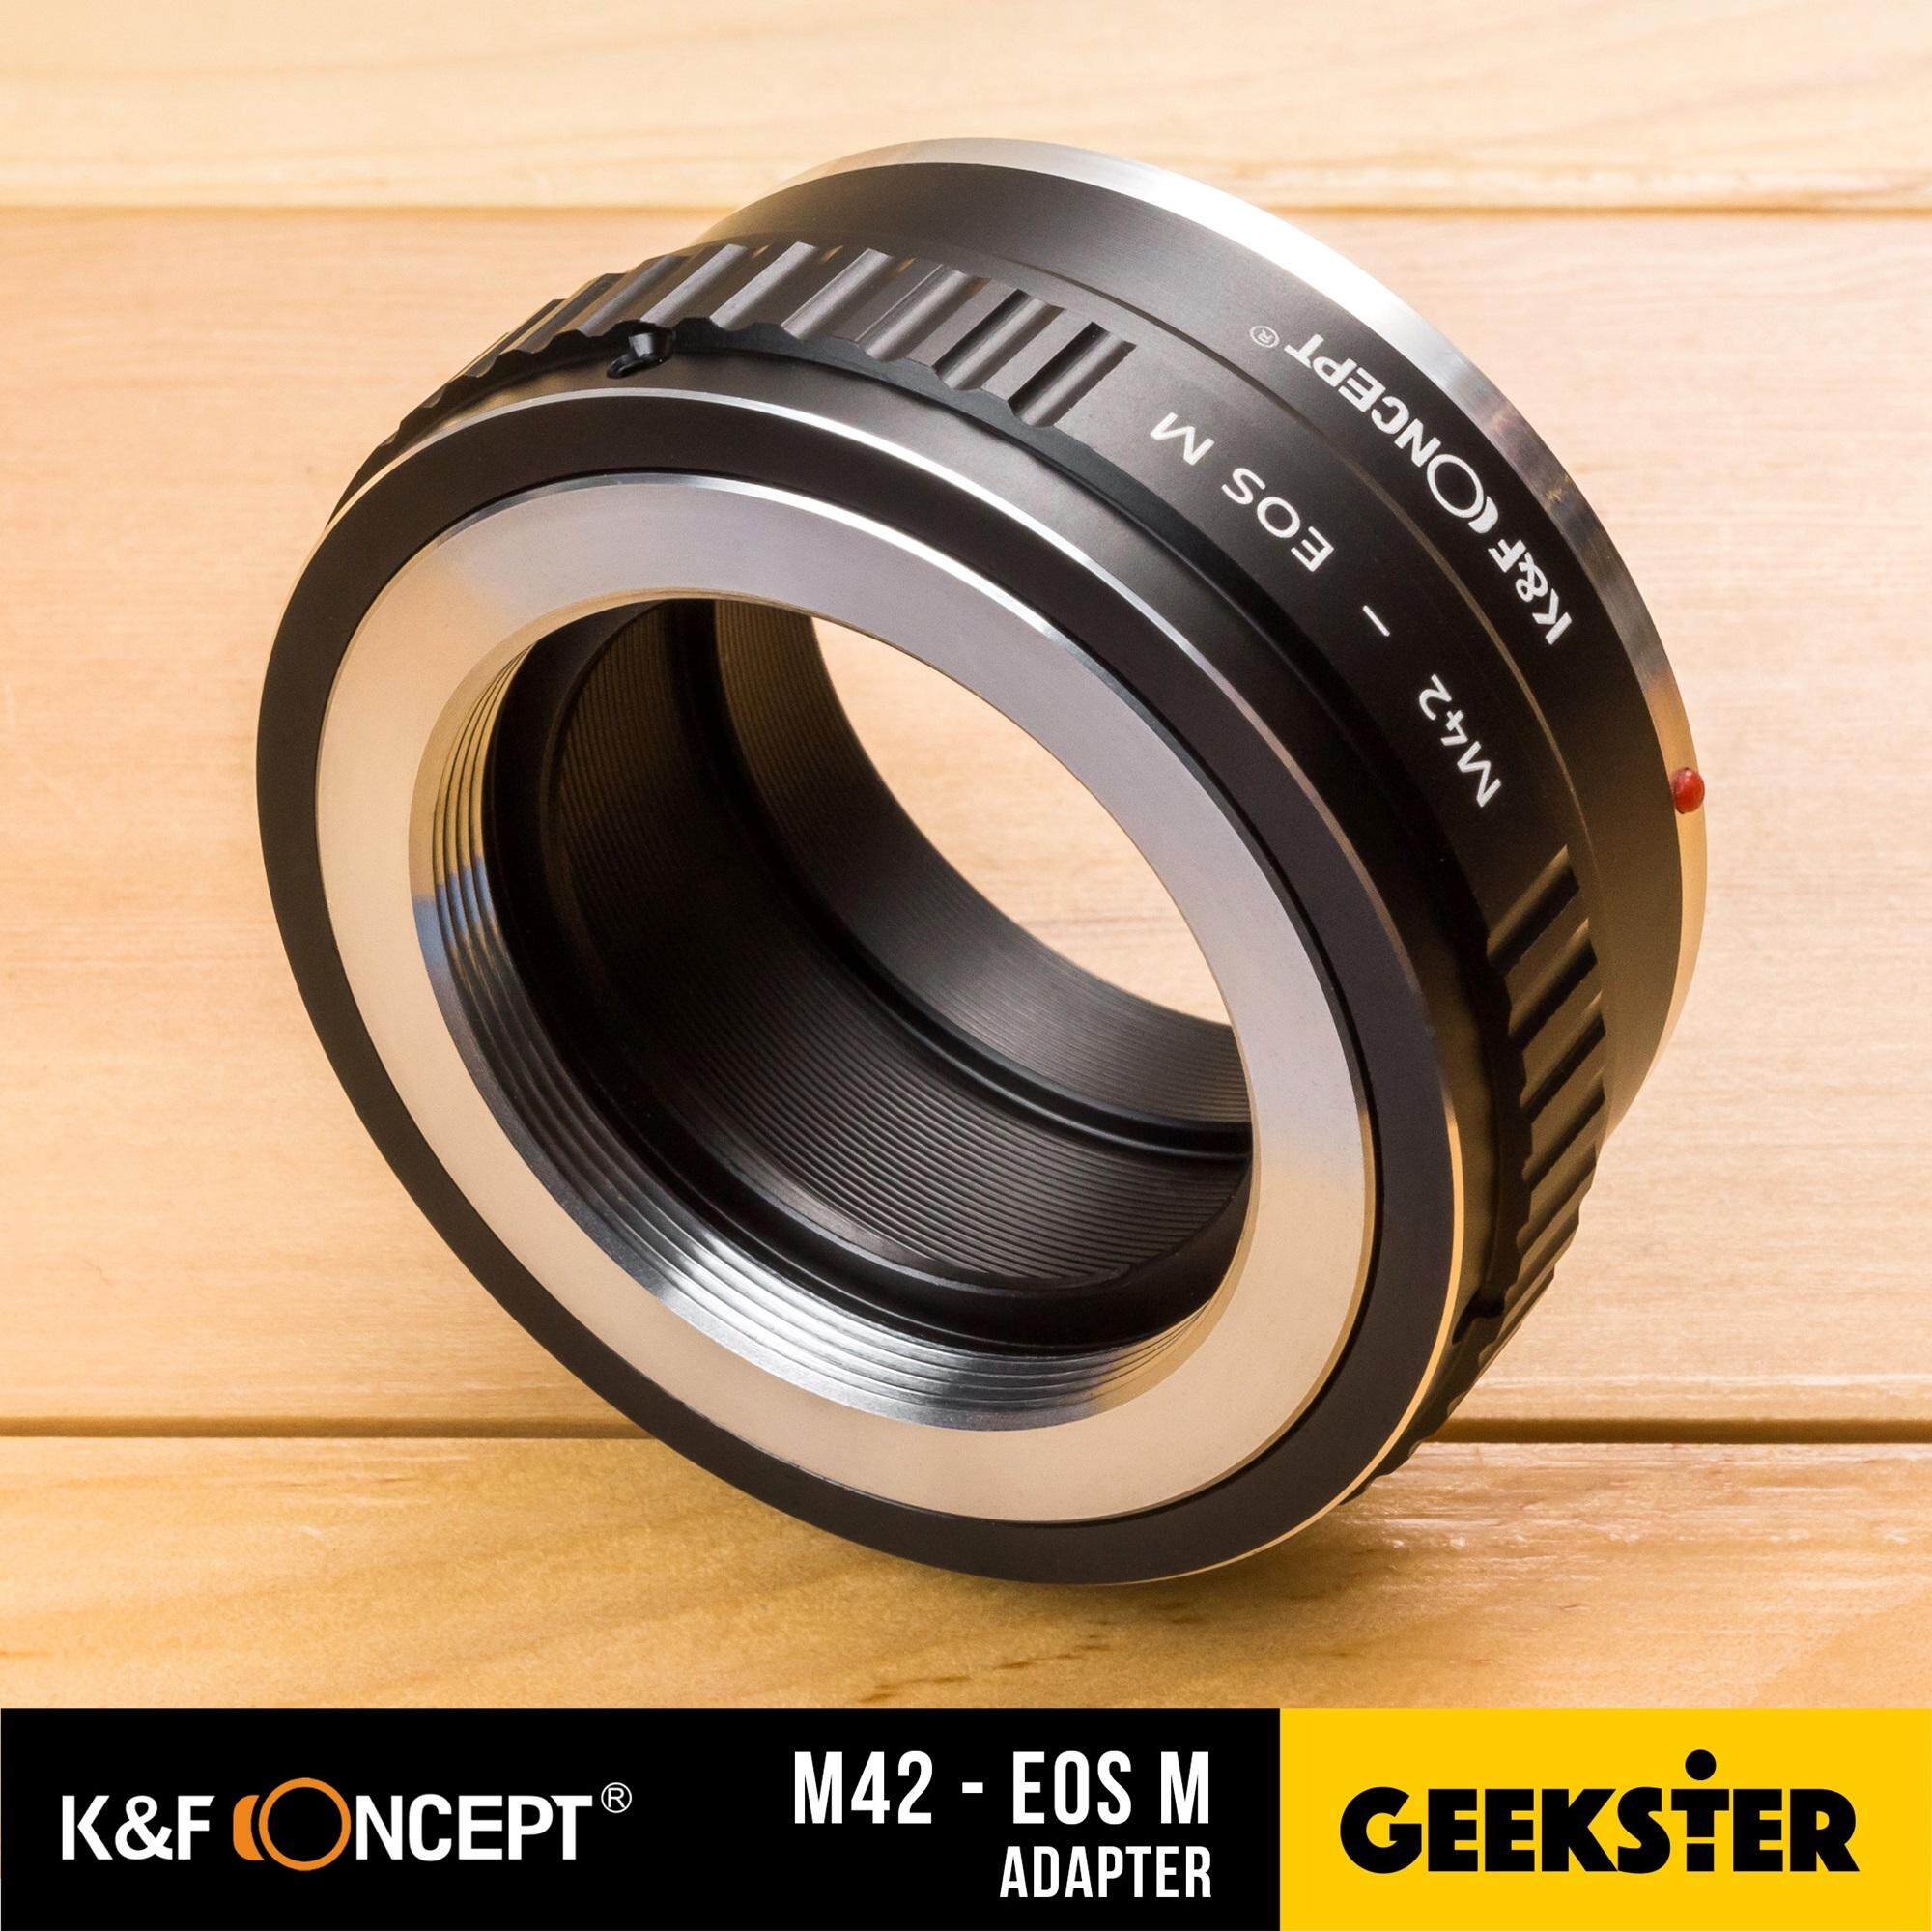 K&F M42-EOS M Adapter แปลงเลนส์เมาส์ M42 เพื่อเอามาใส่กล้อง Canon Mirrorless ได้ทุกรุ่น ( Lens mount adapter Mount M42 For Canon ) ( เมาท์แปลง อแดปเตอร์ ) ( M42-EOS M / M42-EOSM ) ( M42 EOS M / M42 EOSM ) ( Geekster )